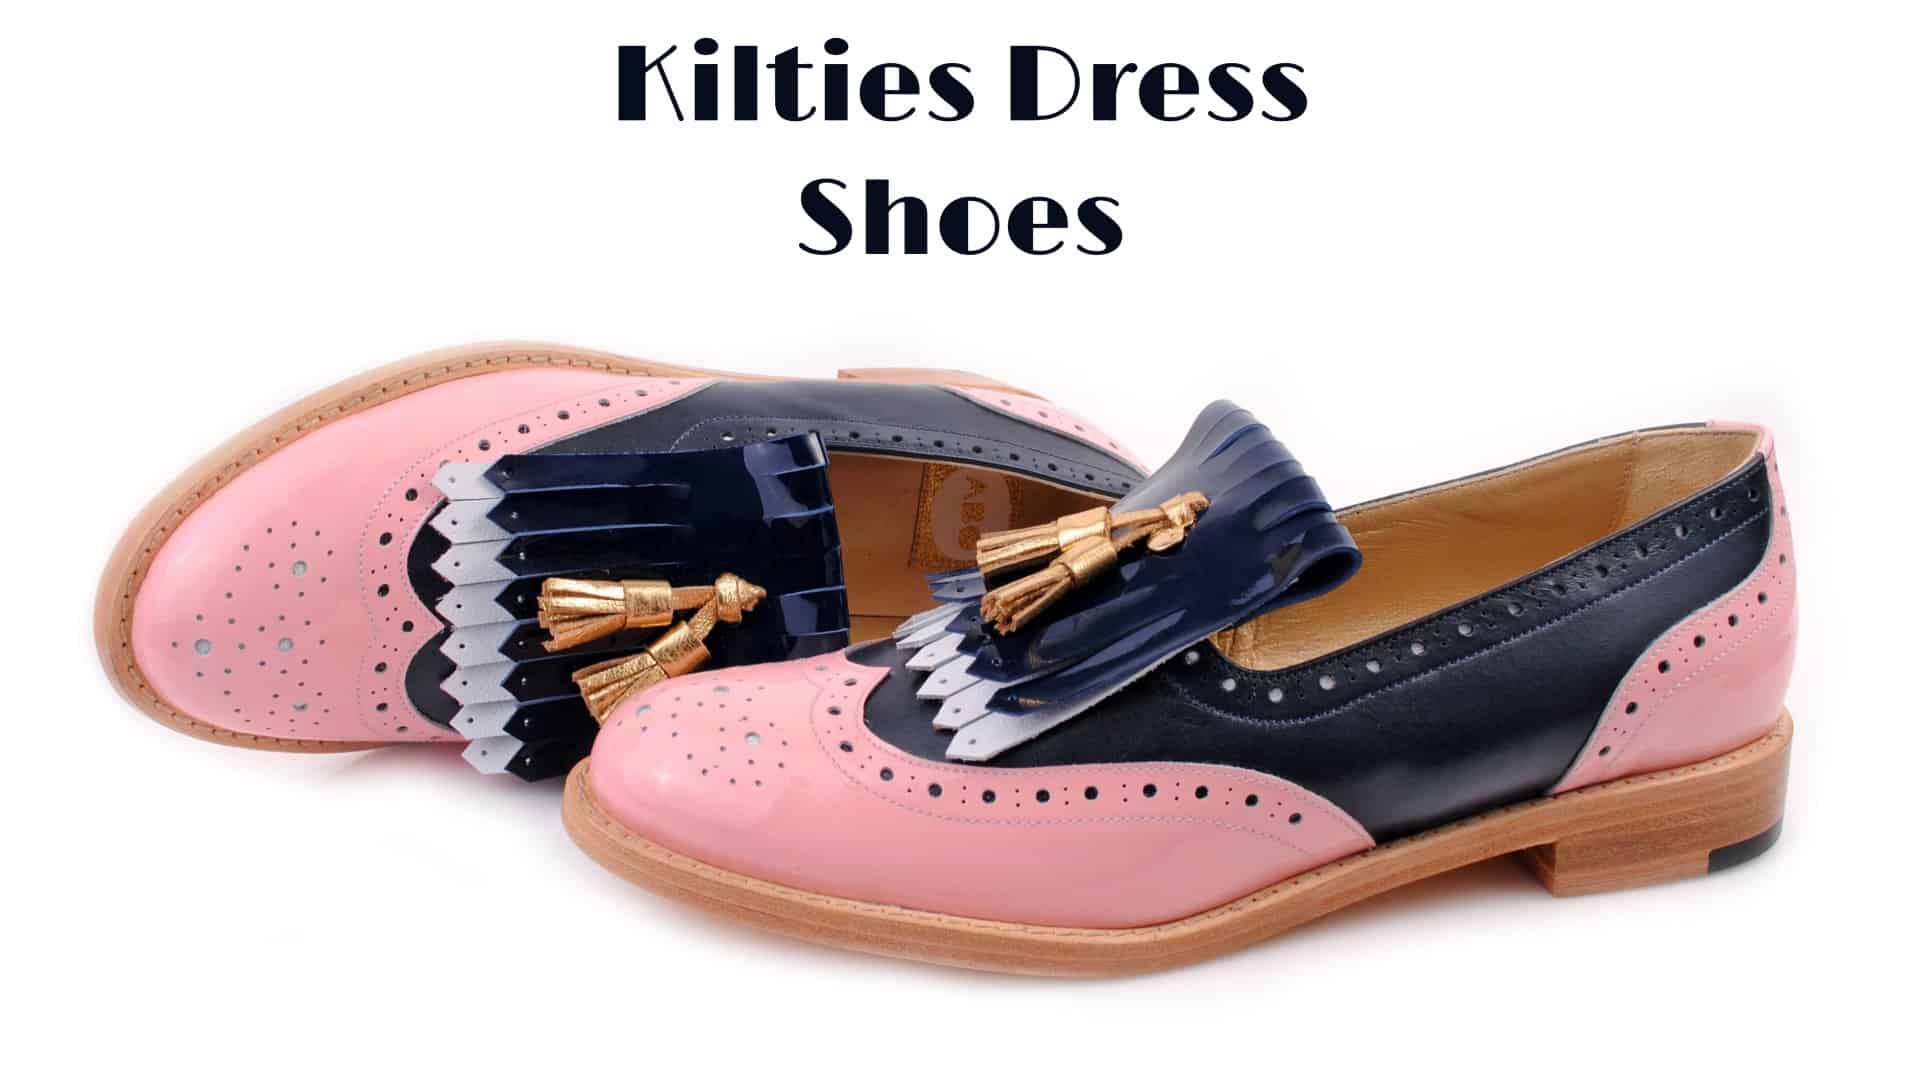 Kilties-Dress-Shoes